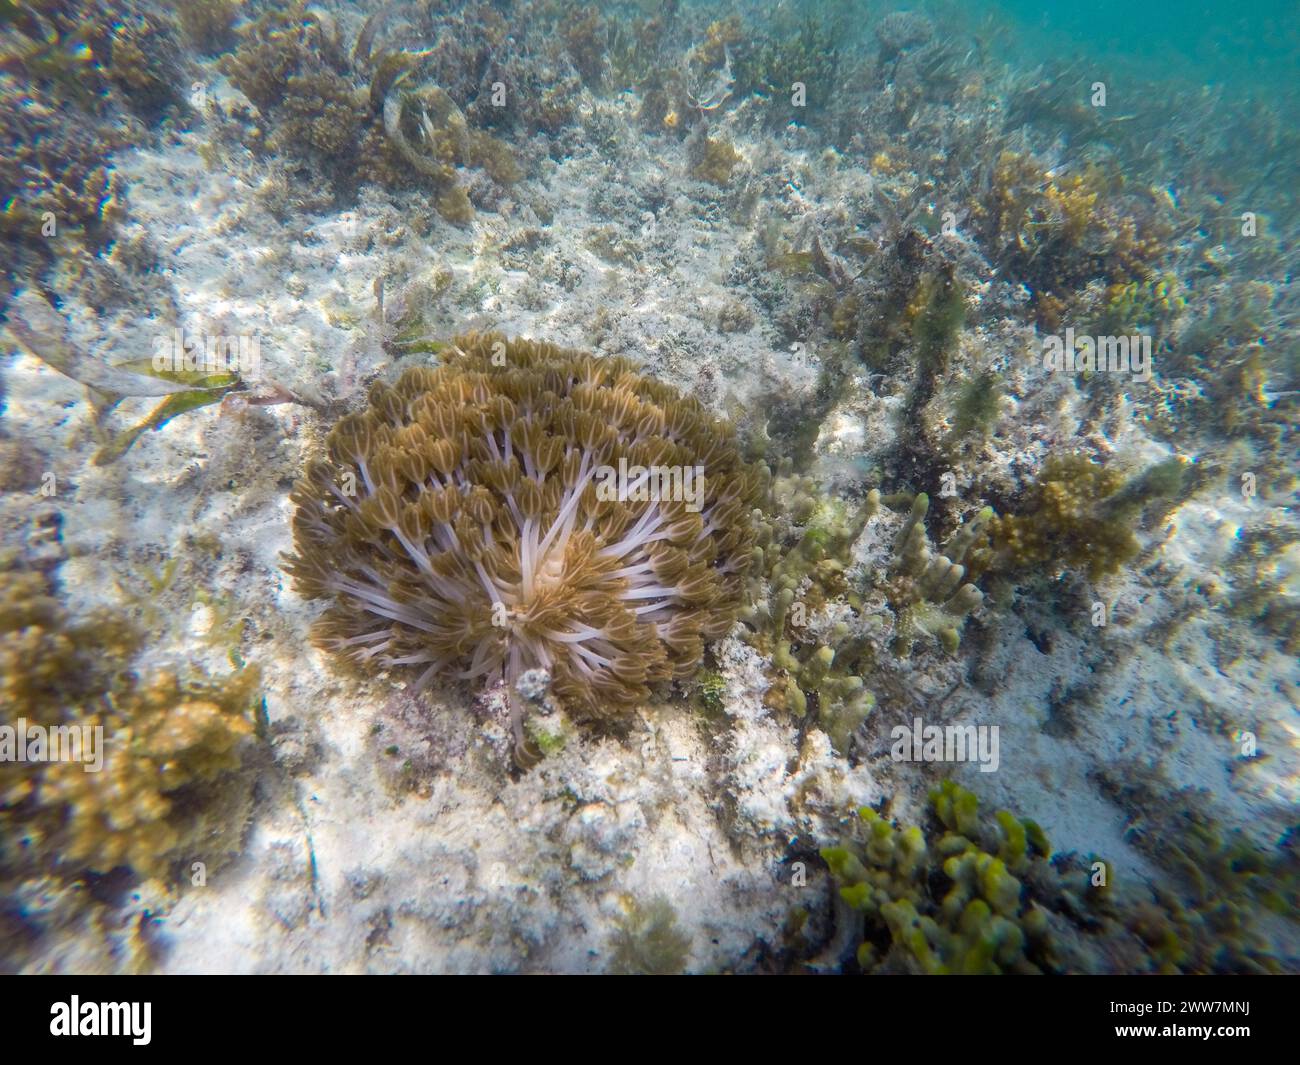 Underwater Photography of a coral reef, East Coast, Zanzibar Stock Photo